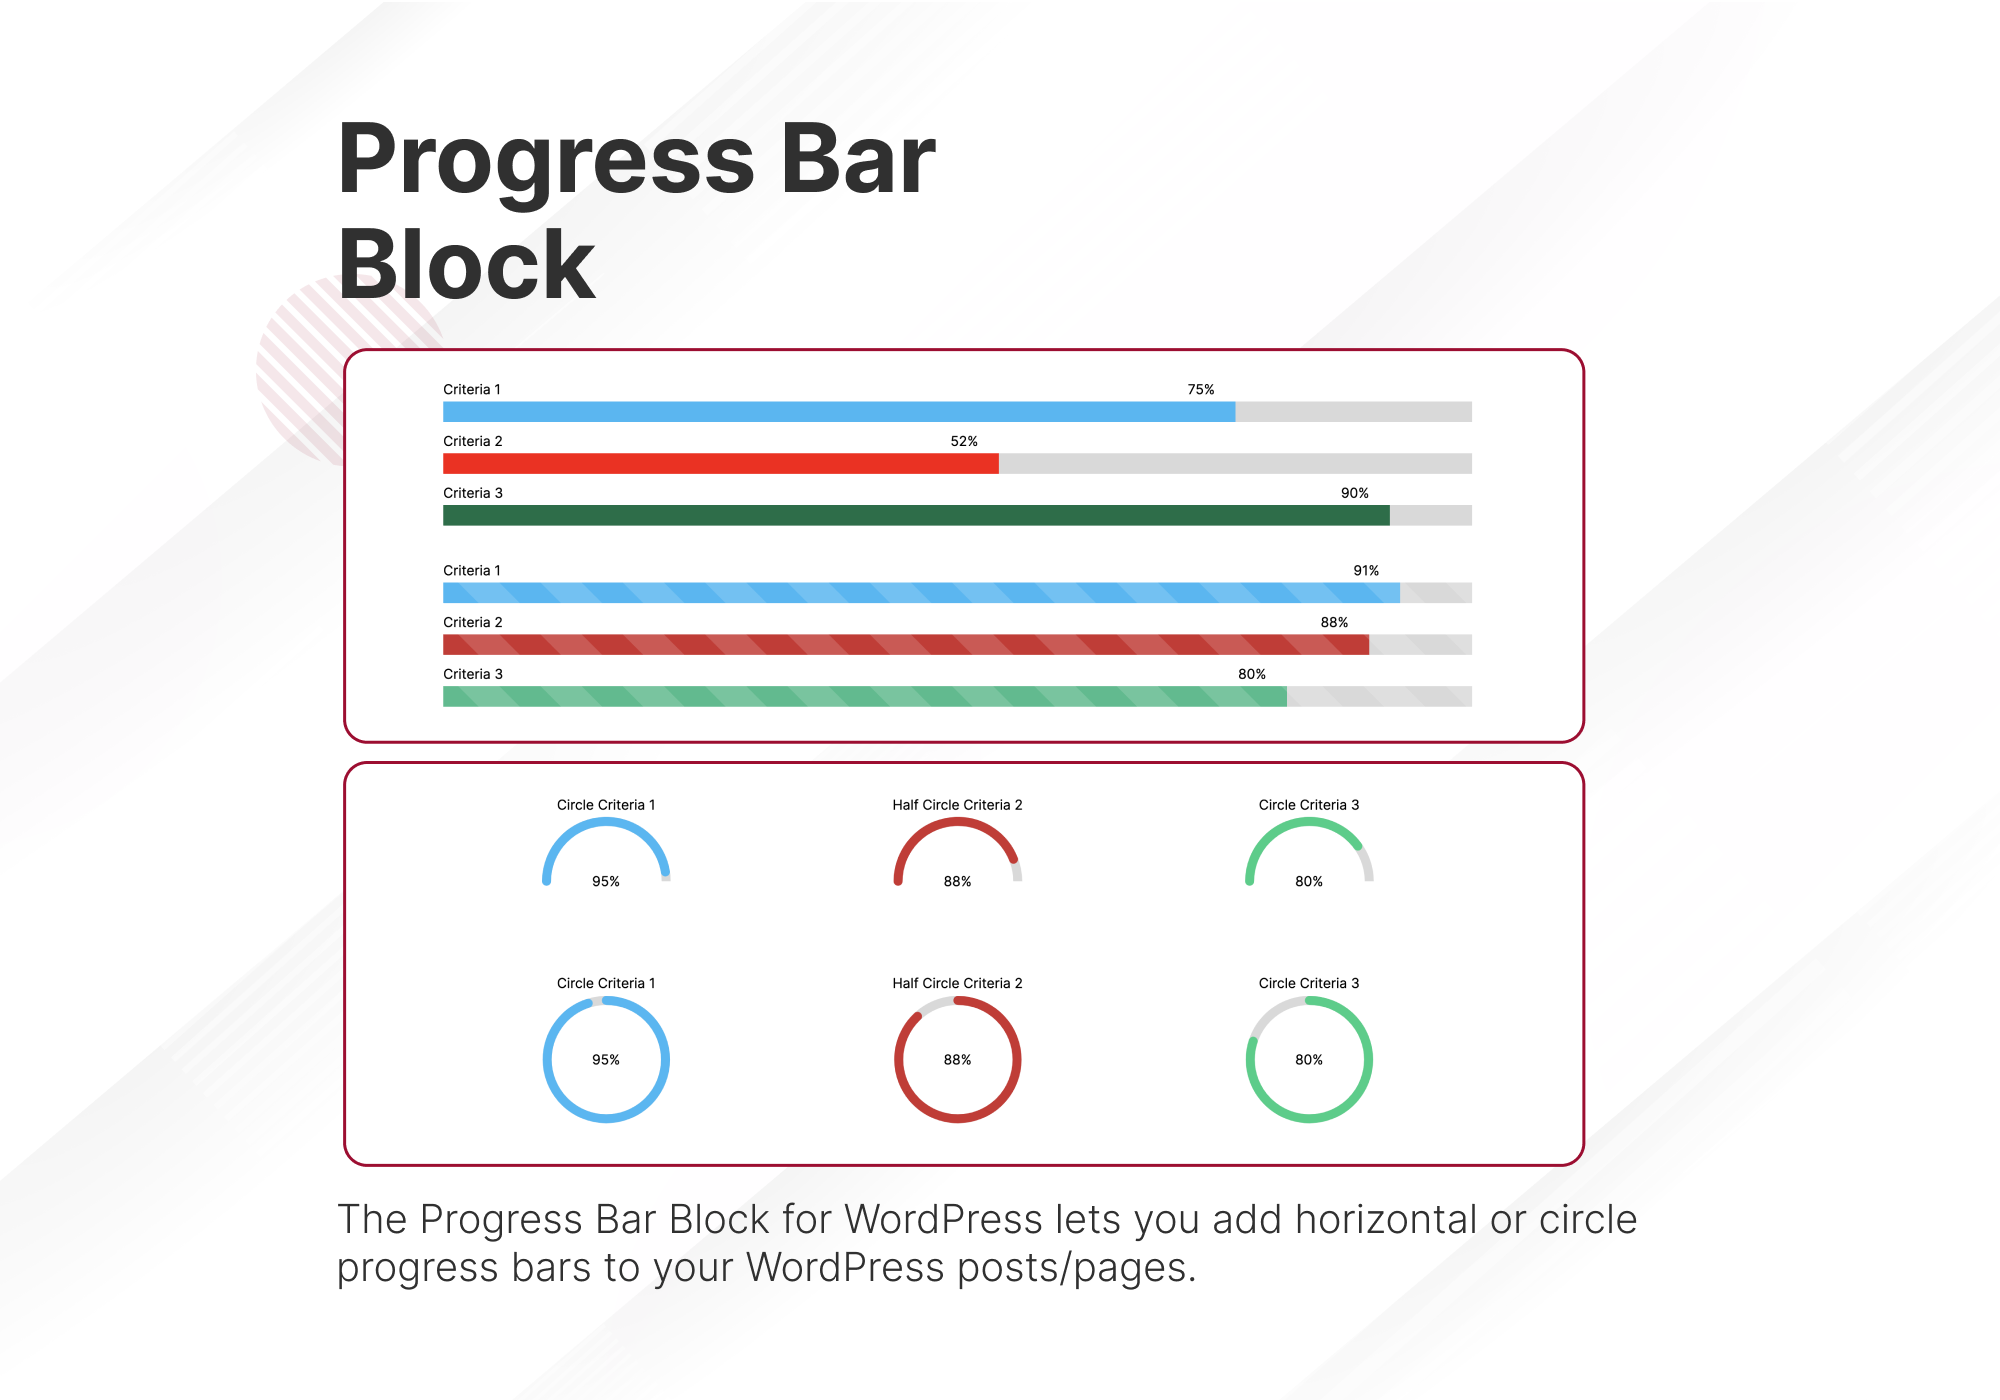 Ultimate Blocks – WordPress Blocks Plugin